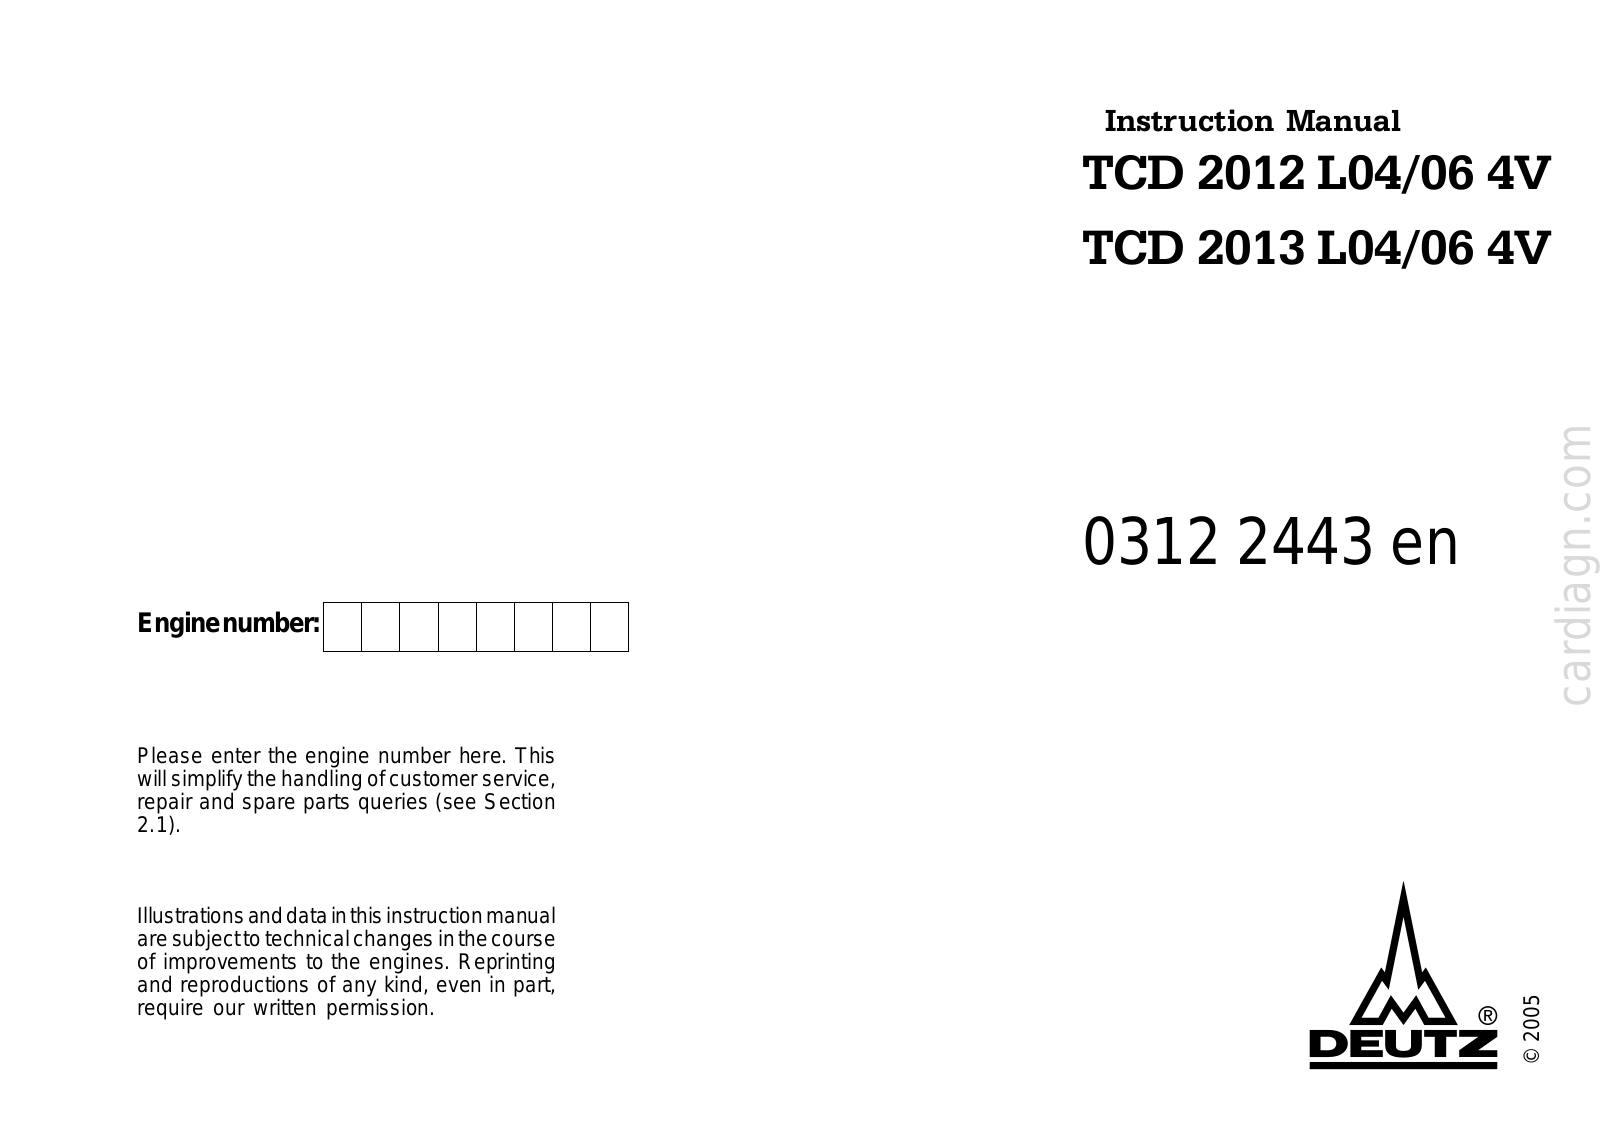 Deutz TCD 2013 L04-06 4V Instruction Manual